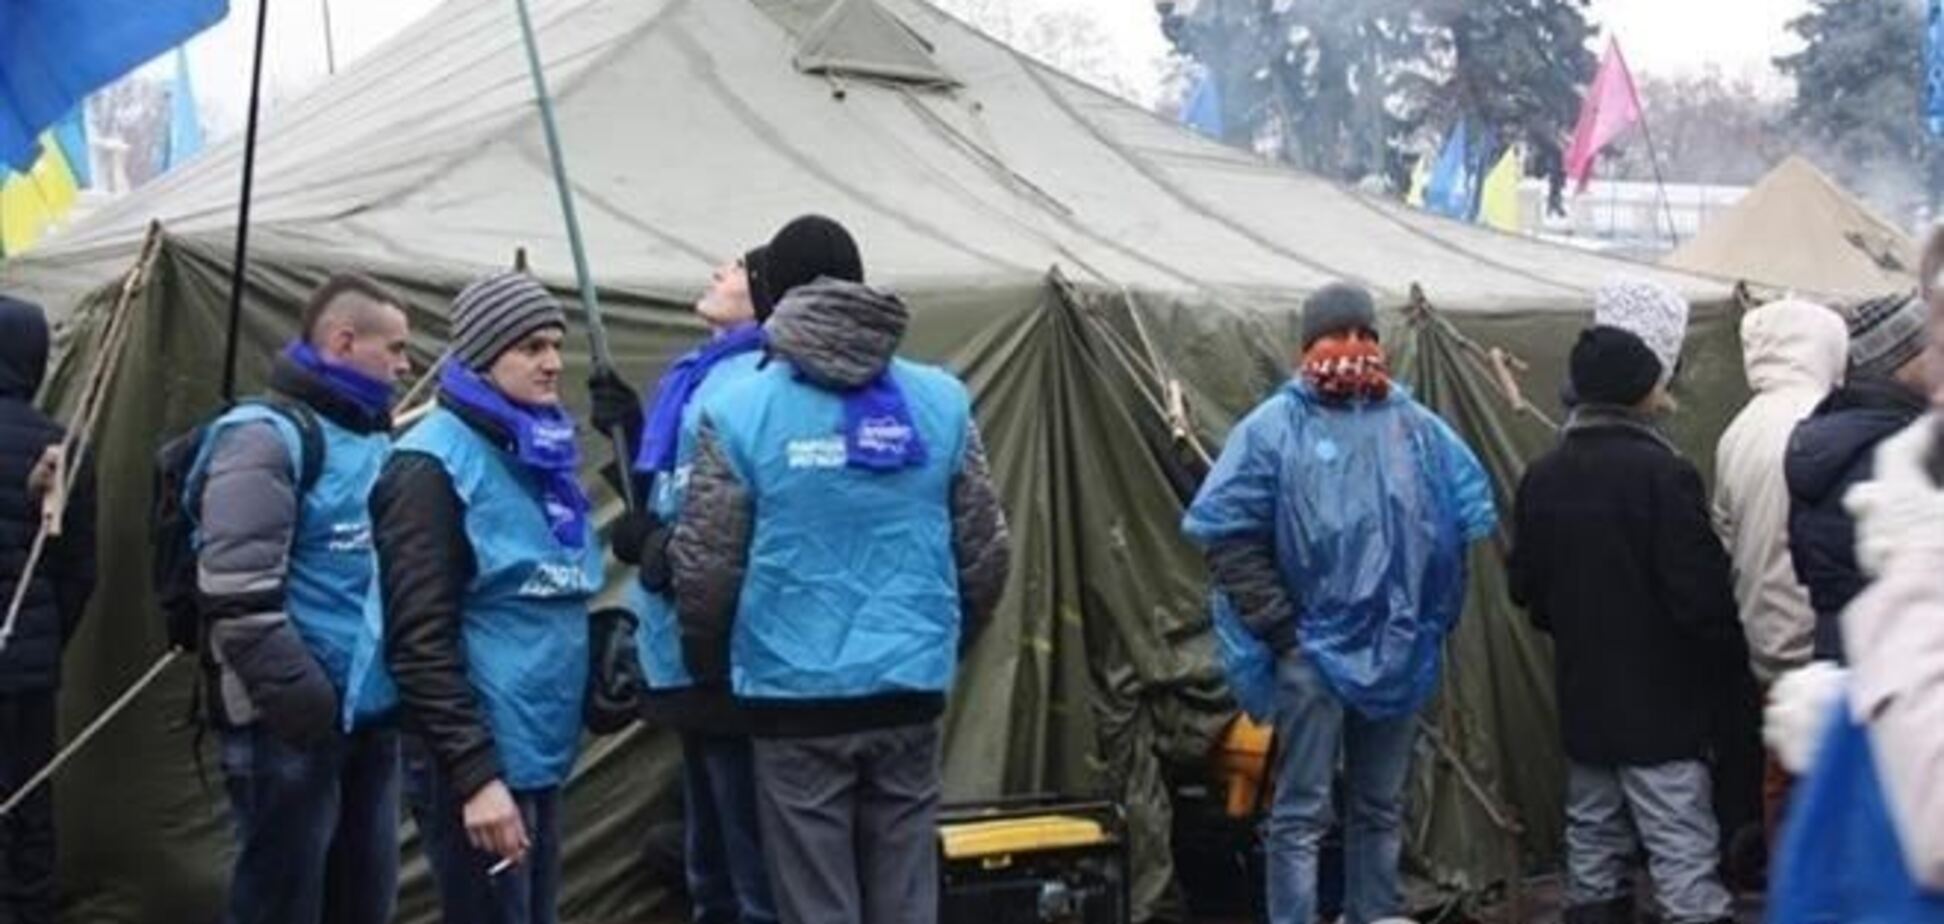 Антимайдановцы собираются идти на Евромайдан